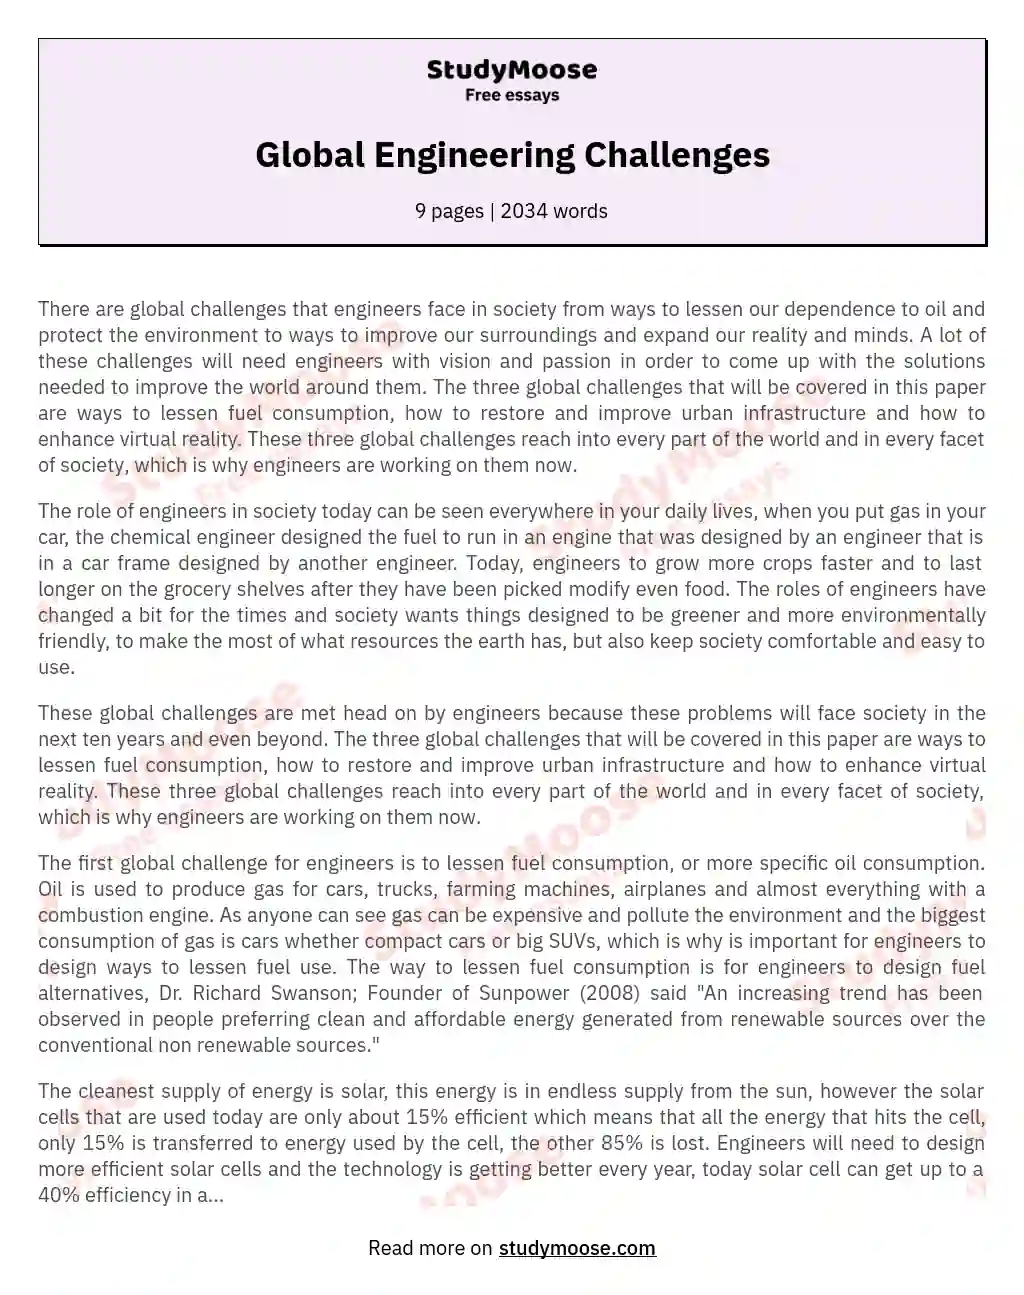 Global Engineering Challenges essay